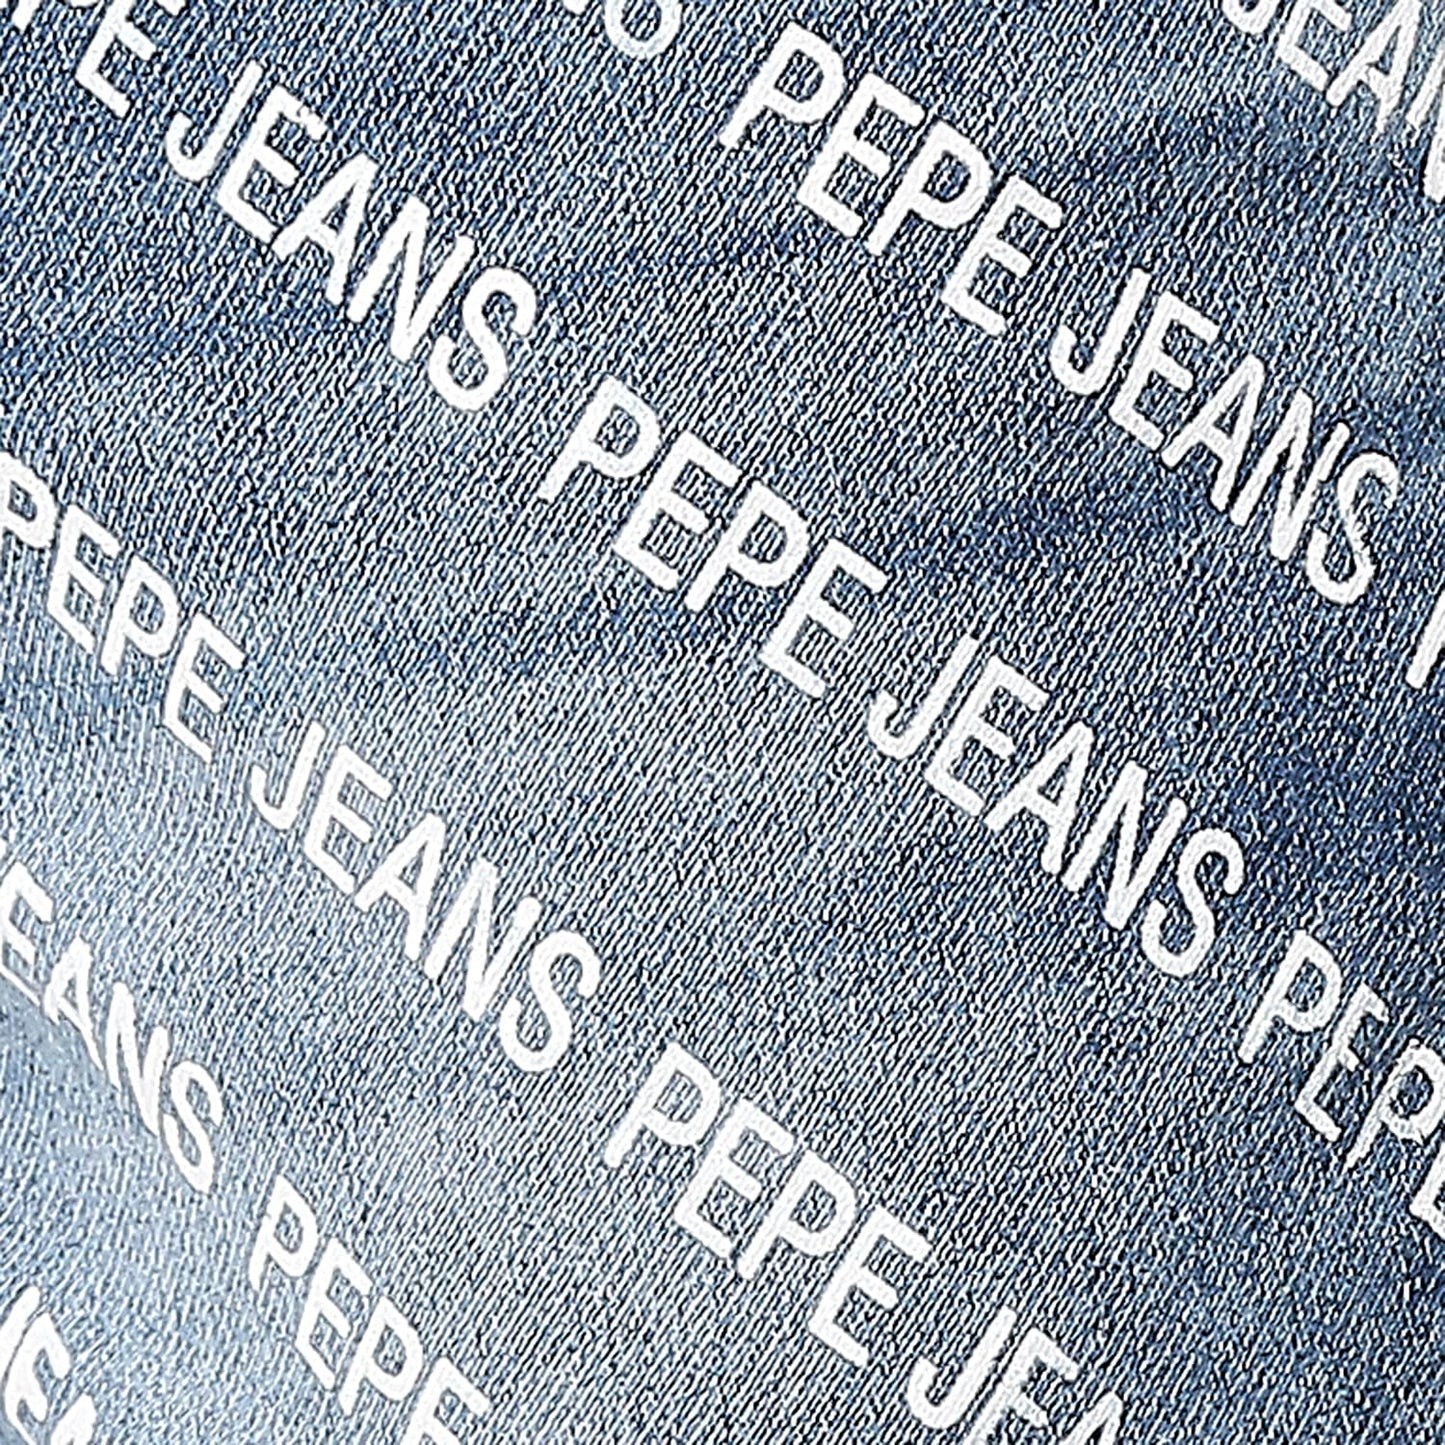 Pepe Jeans Men's Chino Shorts (PM801059J67_Med Dark Used